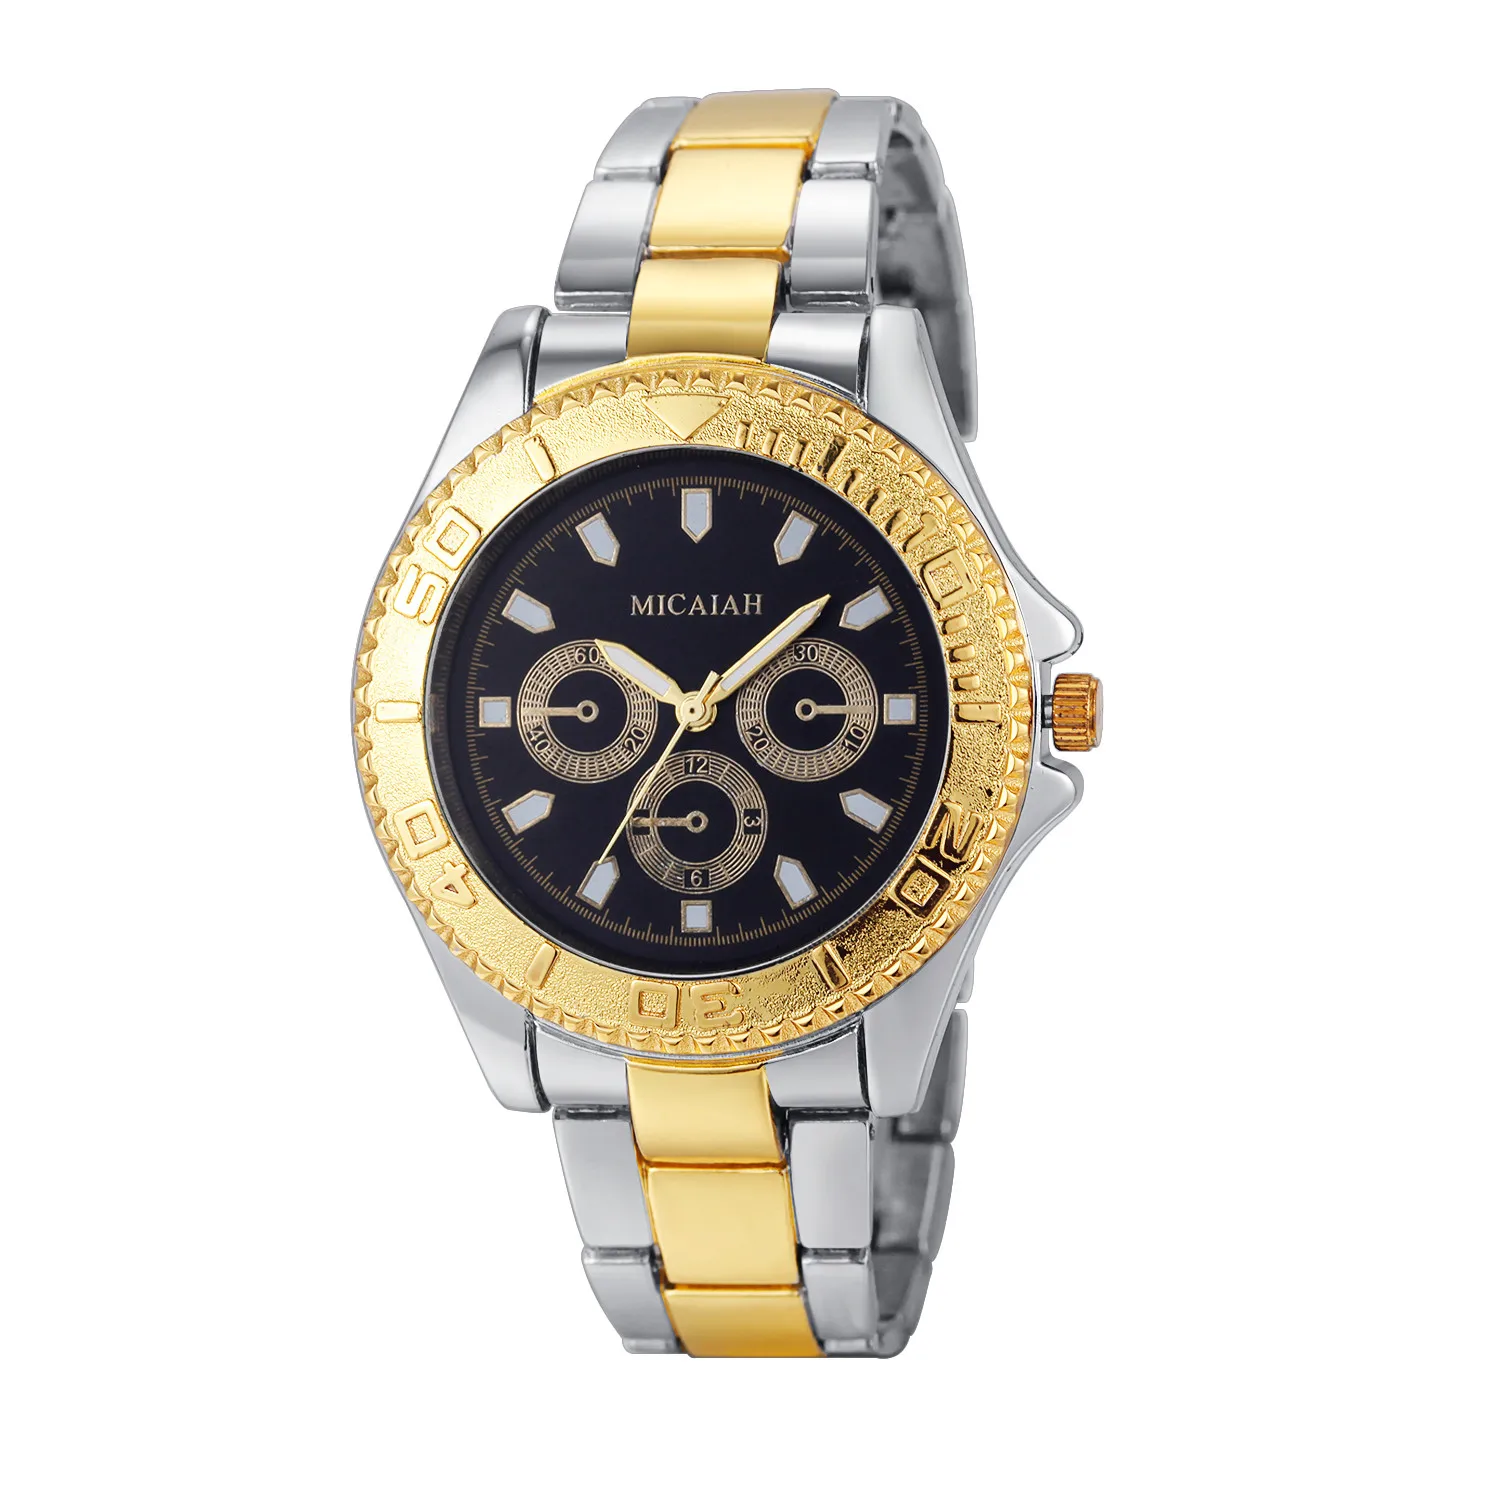 Reloj Hombre часы, мужские брендовые роскошные стальные часы с датой, мужские деловые часы, Классические наручные часы, повседневные часы, Relogio Masculino Reloj